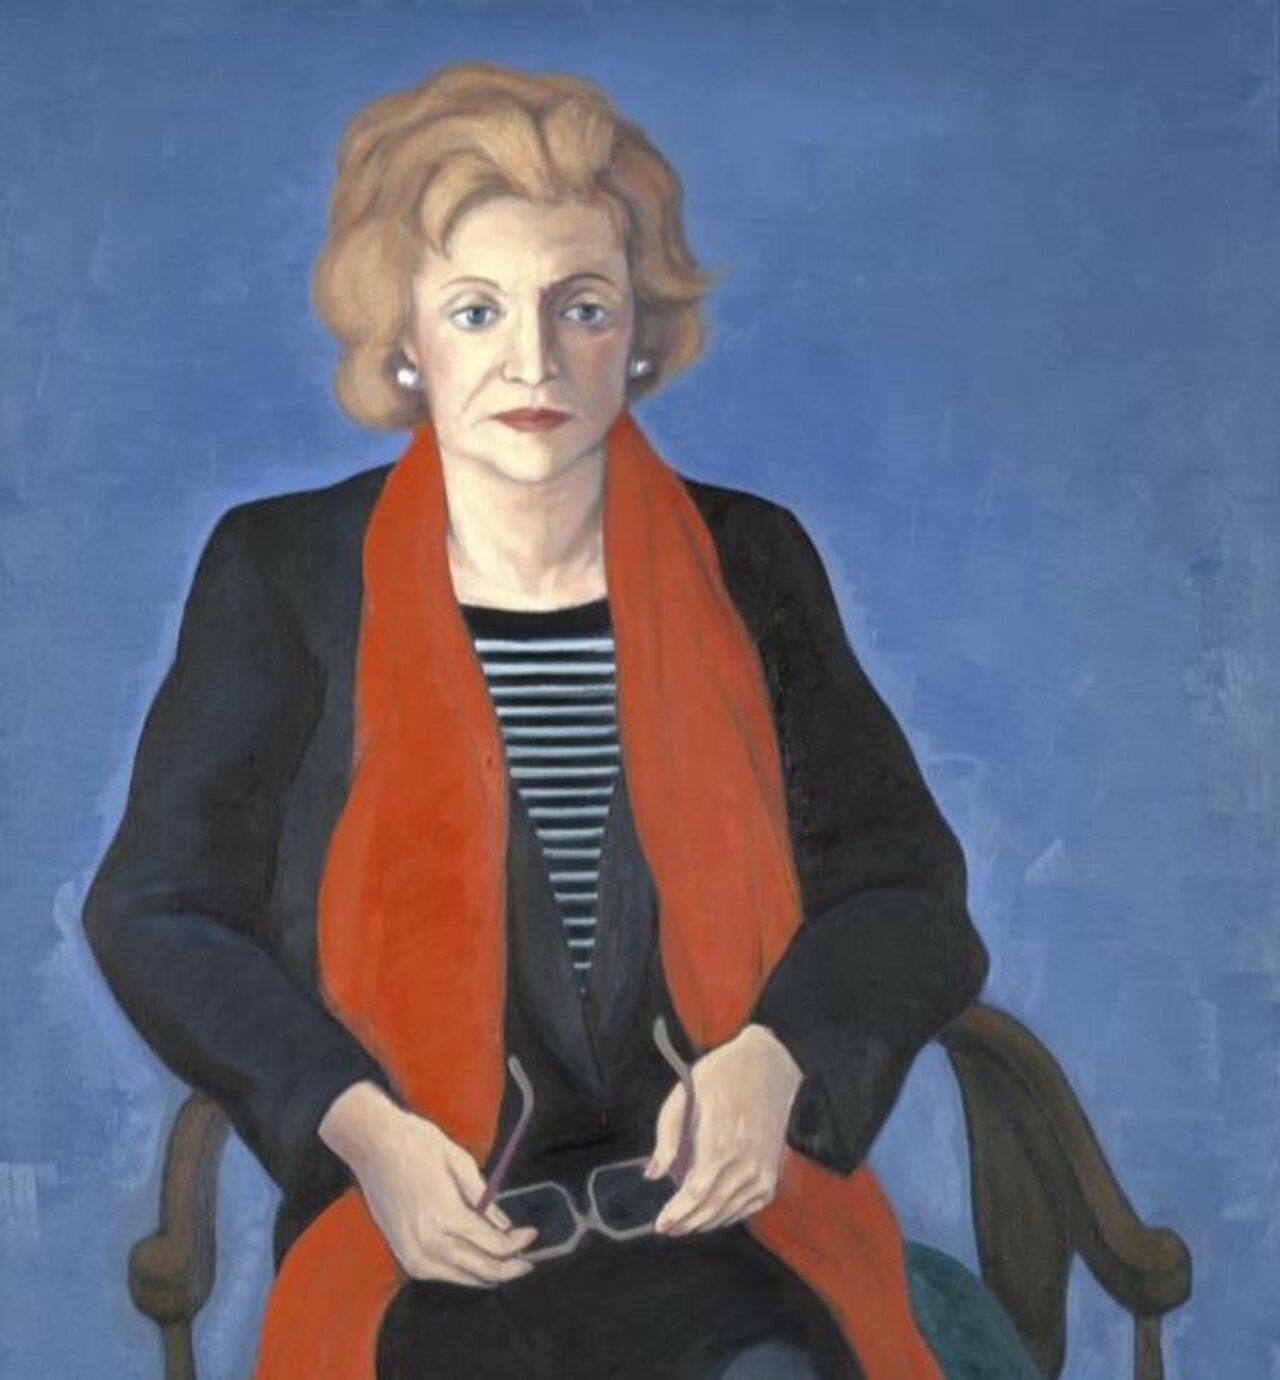 Back to @edbookfest today for Alan Taylor's Loitering with Muriel Spark (https://bit.ly/2OTSvJF) so here is a detail of her 1984 portrait by @eca_edinburgh-trained @GSofA-teacher Alexander (Sandy) Moffat in @NatGalleriesSco collection (c) Alexander Moffat #murielspark100 #art https://t.co/6bPvNsAYKa